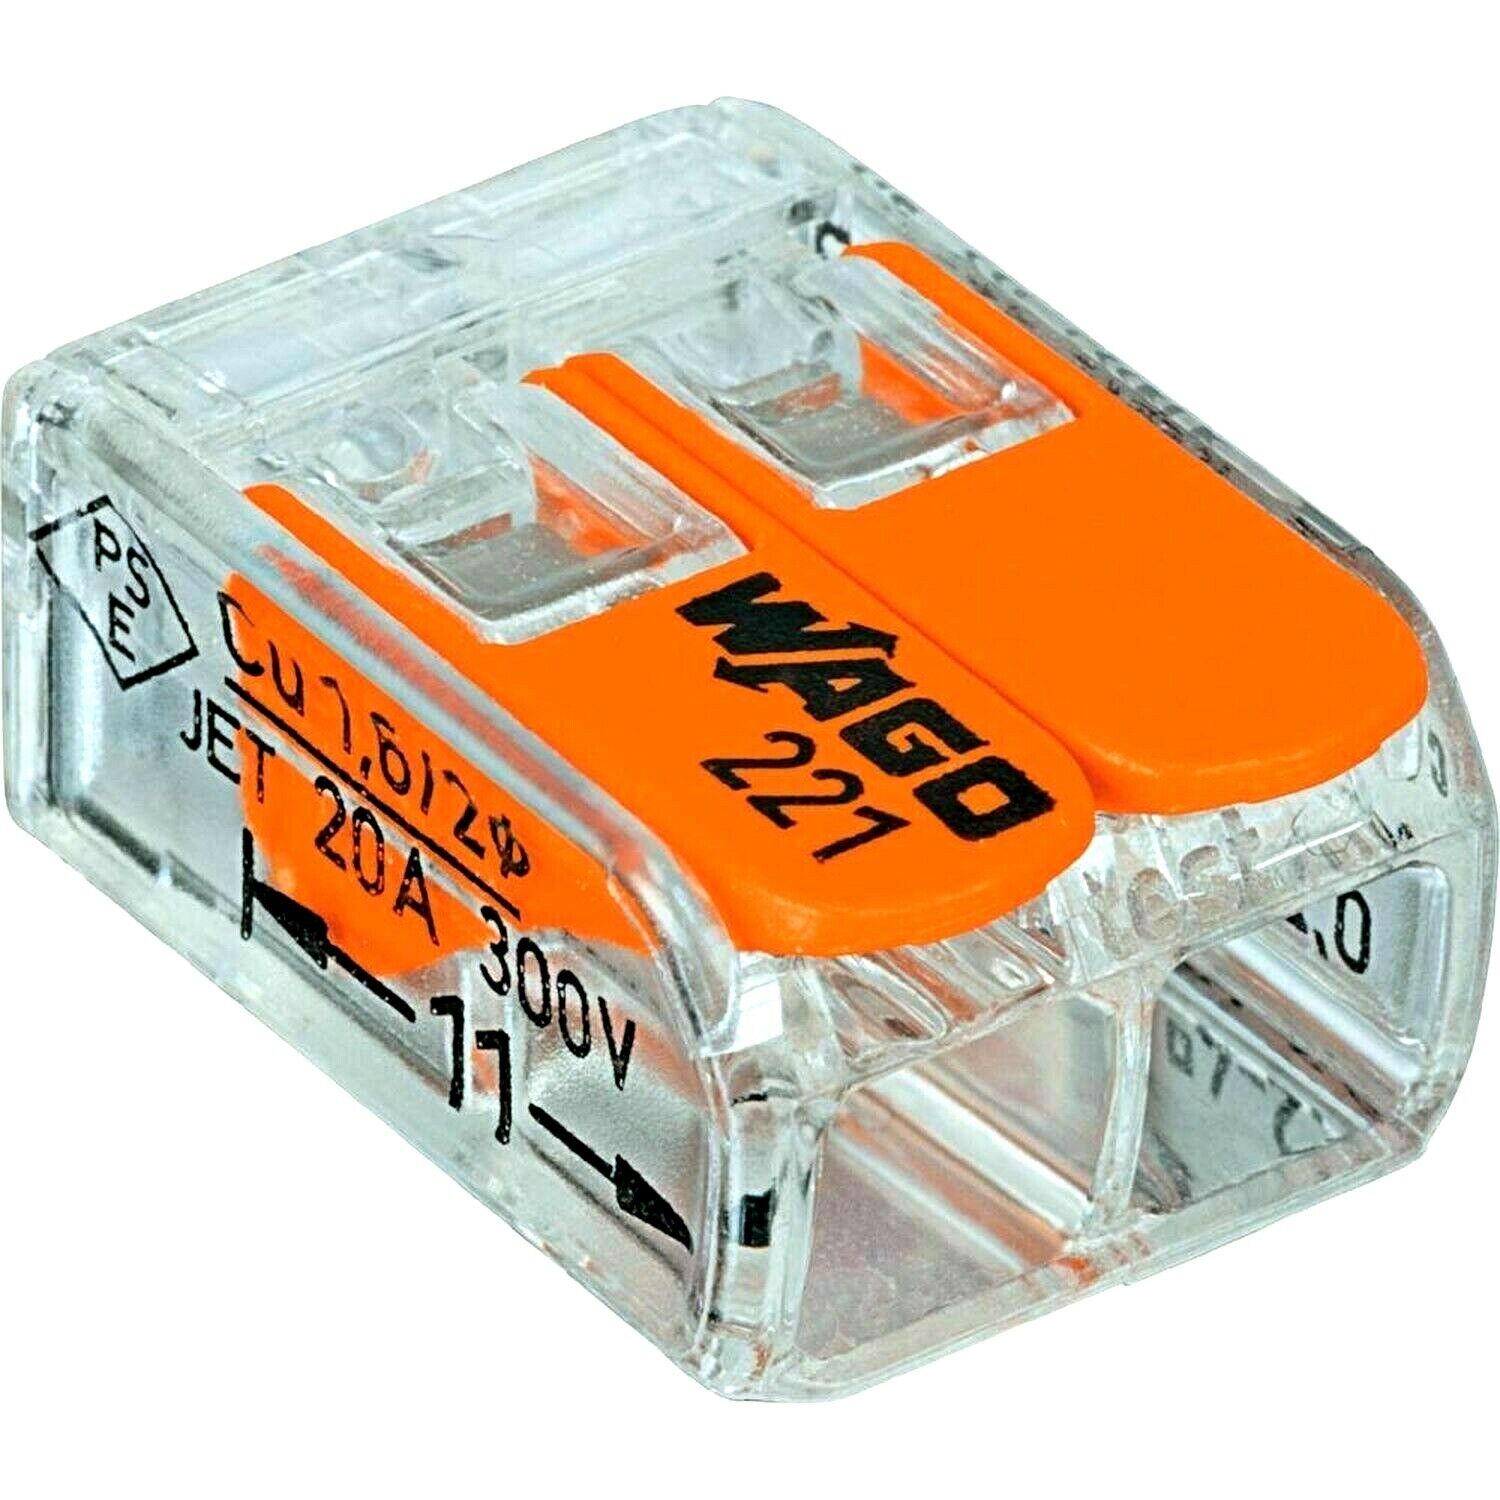 WAGO 221-412 LEVER-NUTS 2 Conductor Compact Connectors 25 pcs